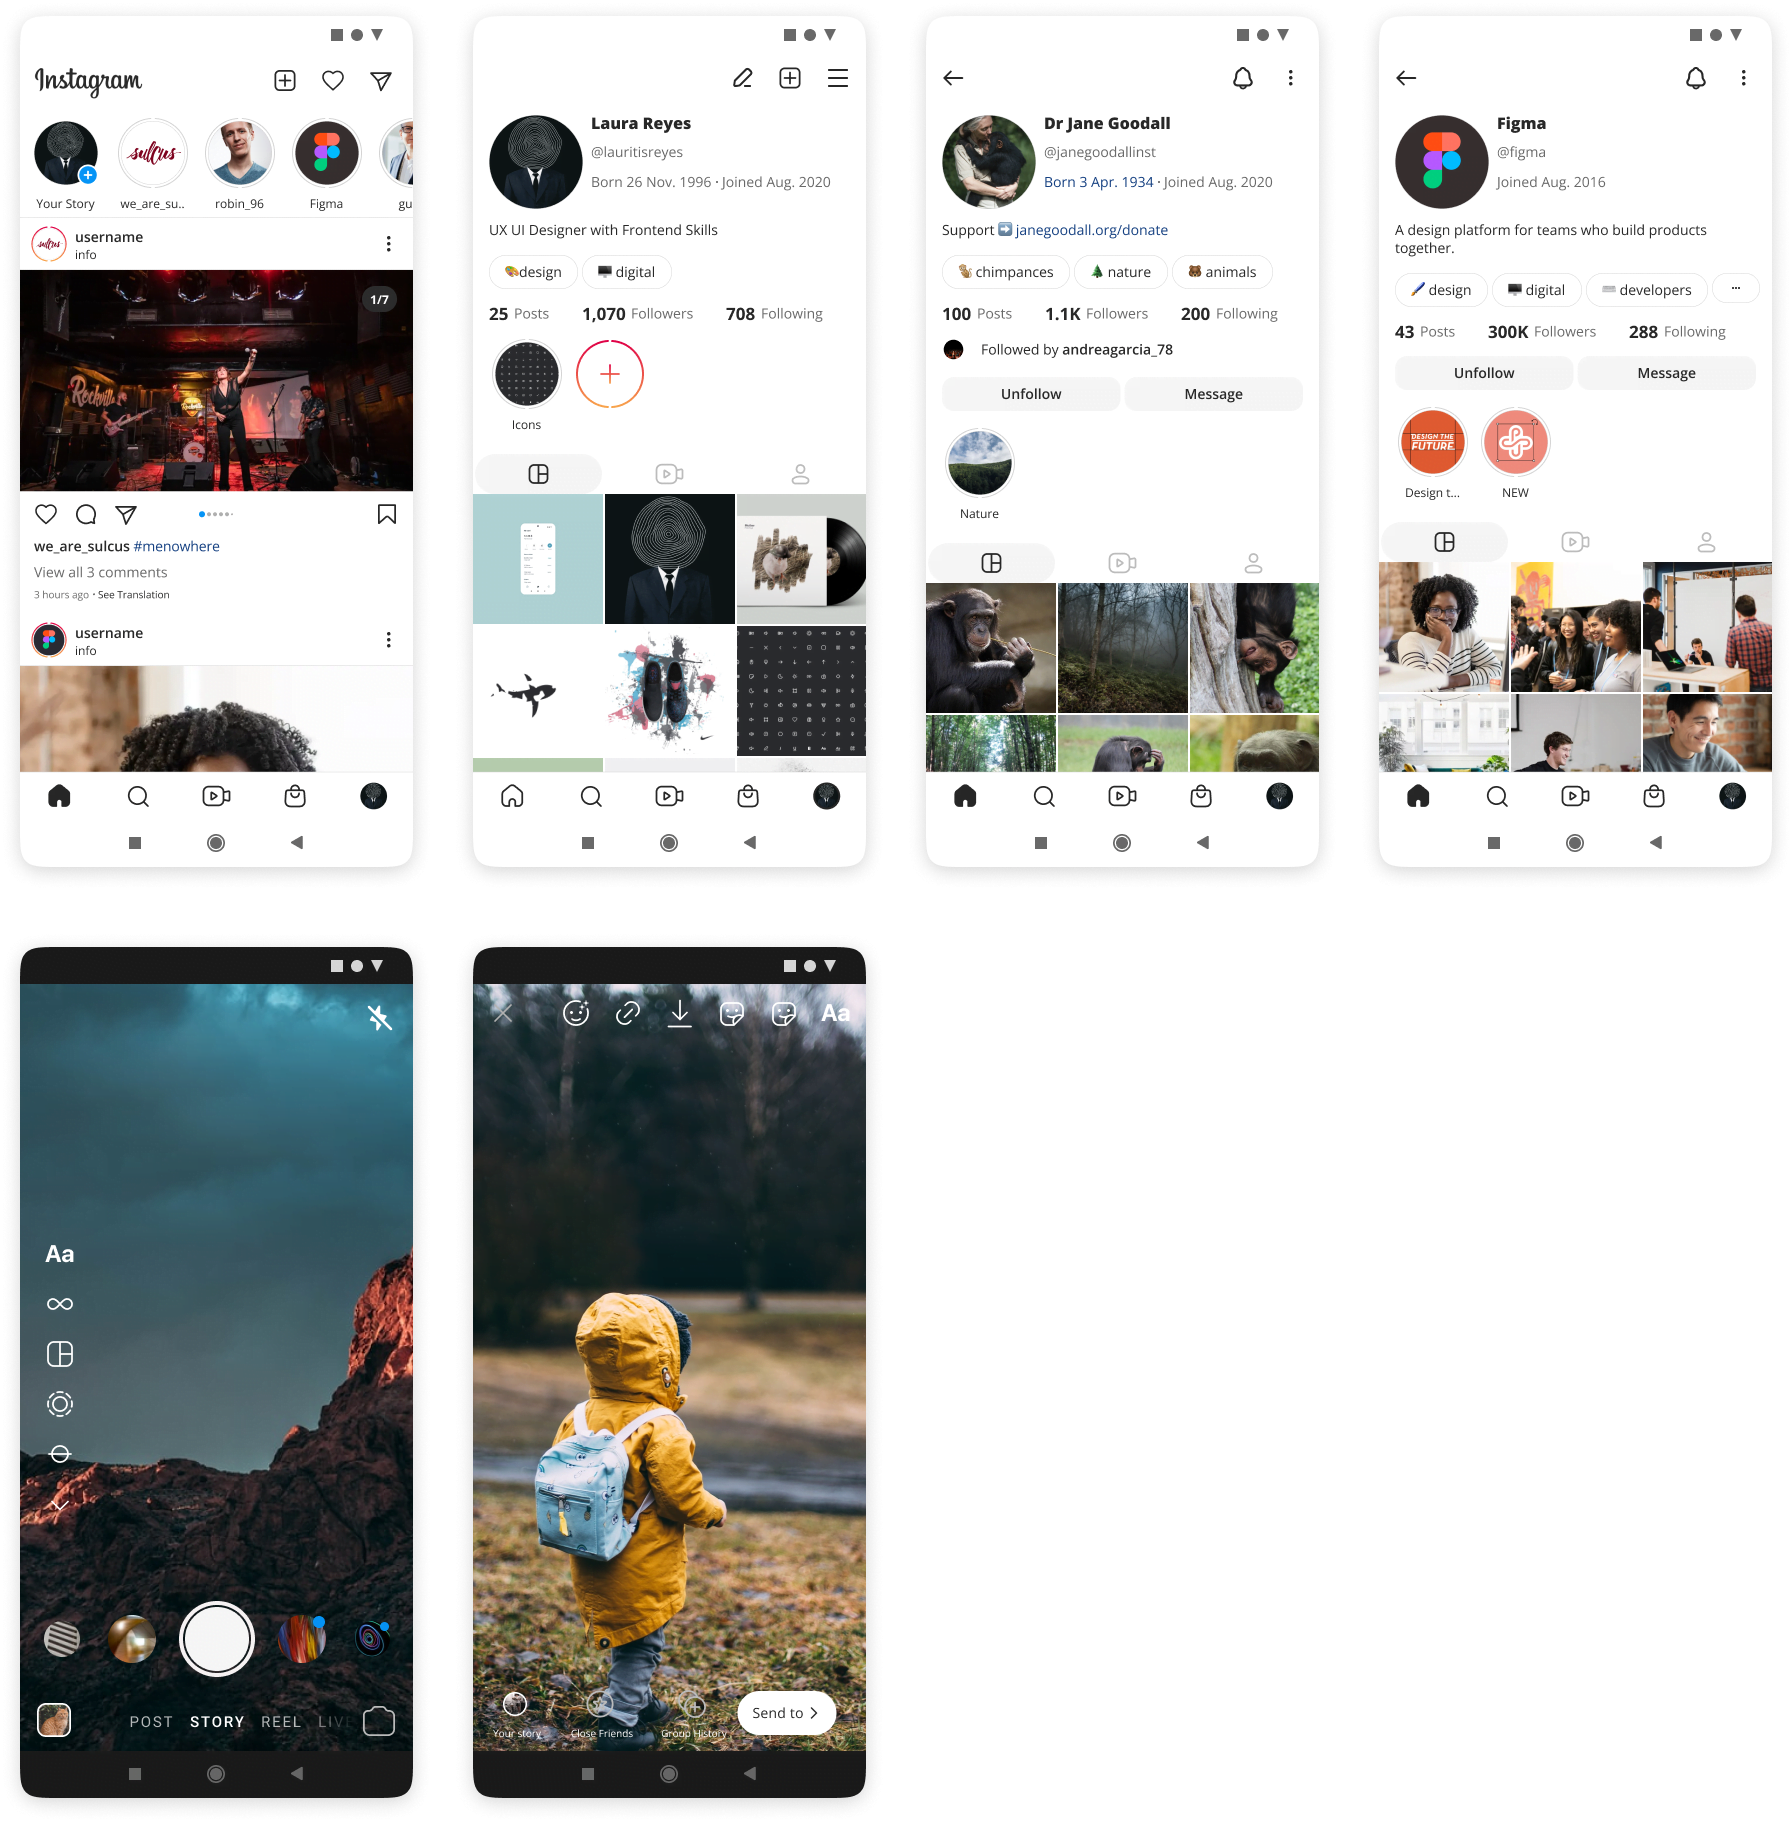 Instagram app UI设计 - 时尚美观的社交App UI素材下载 figma格式-UI/UX-到位啦UI